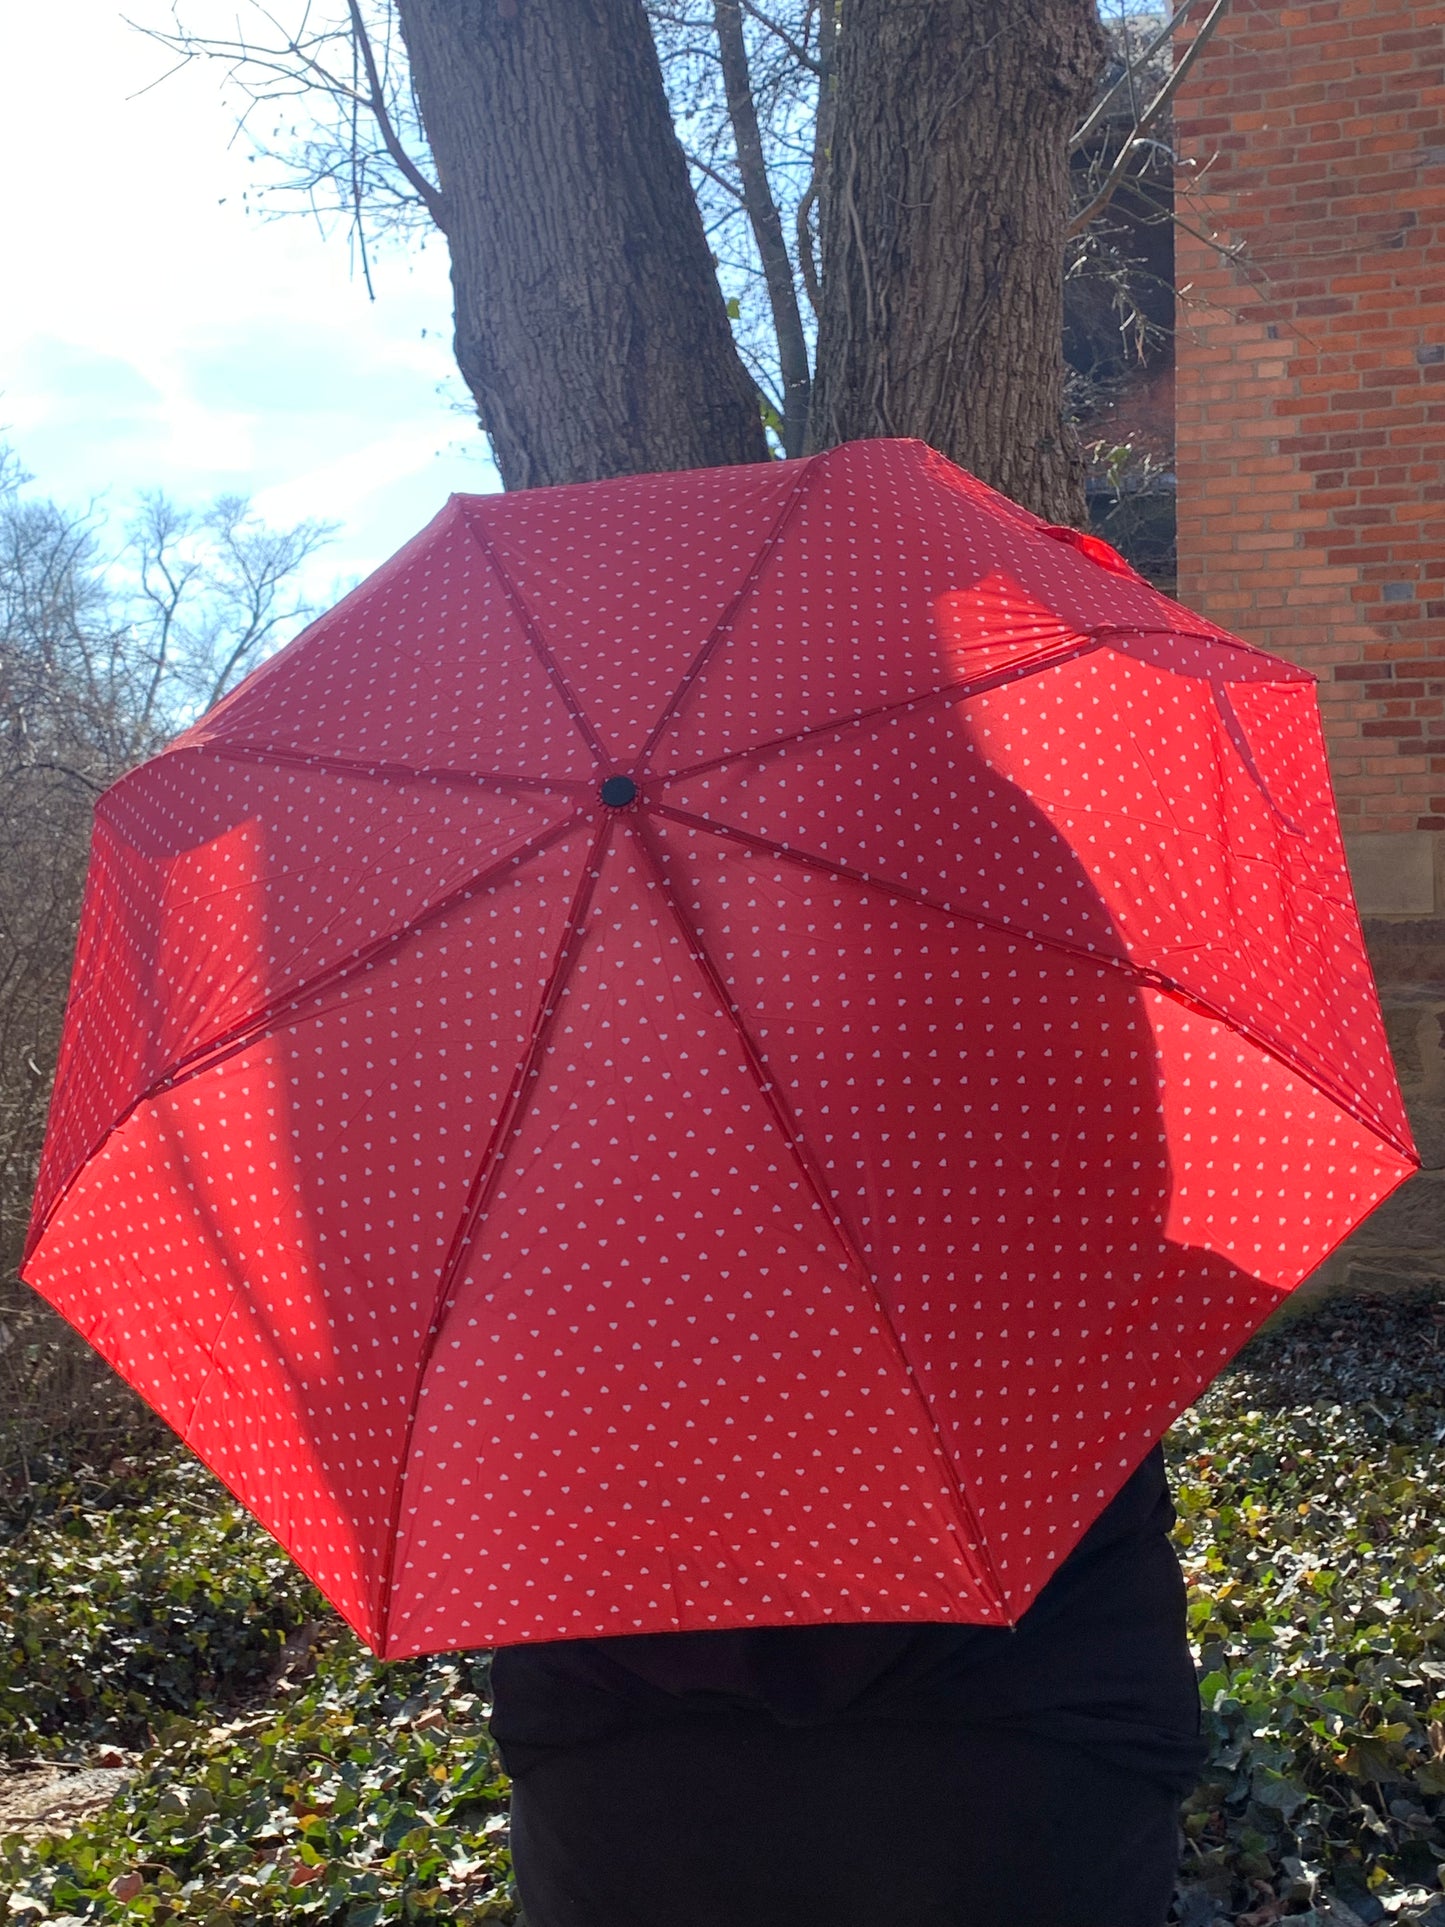 Red/White Heart Umbrella